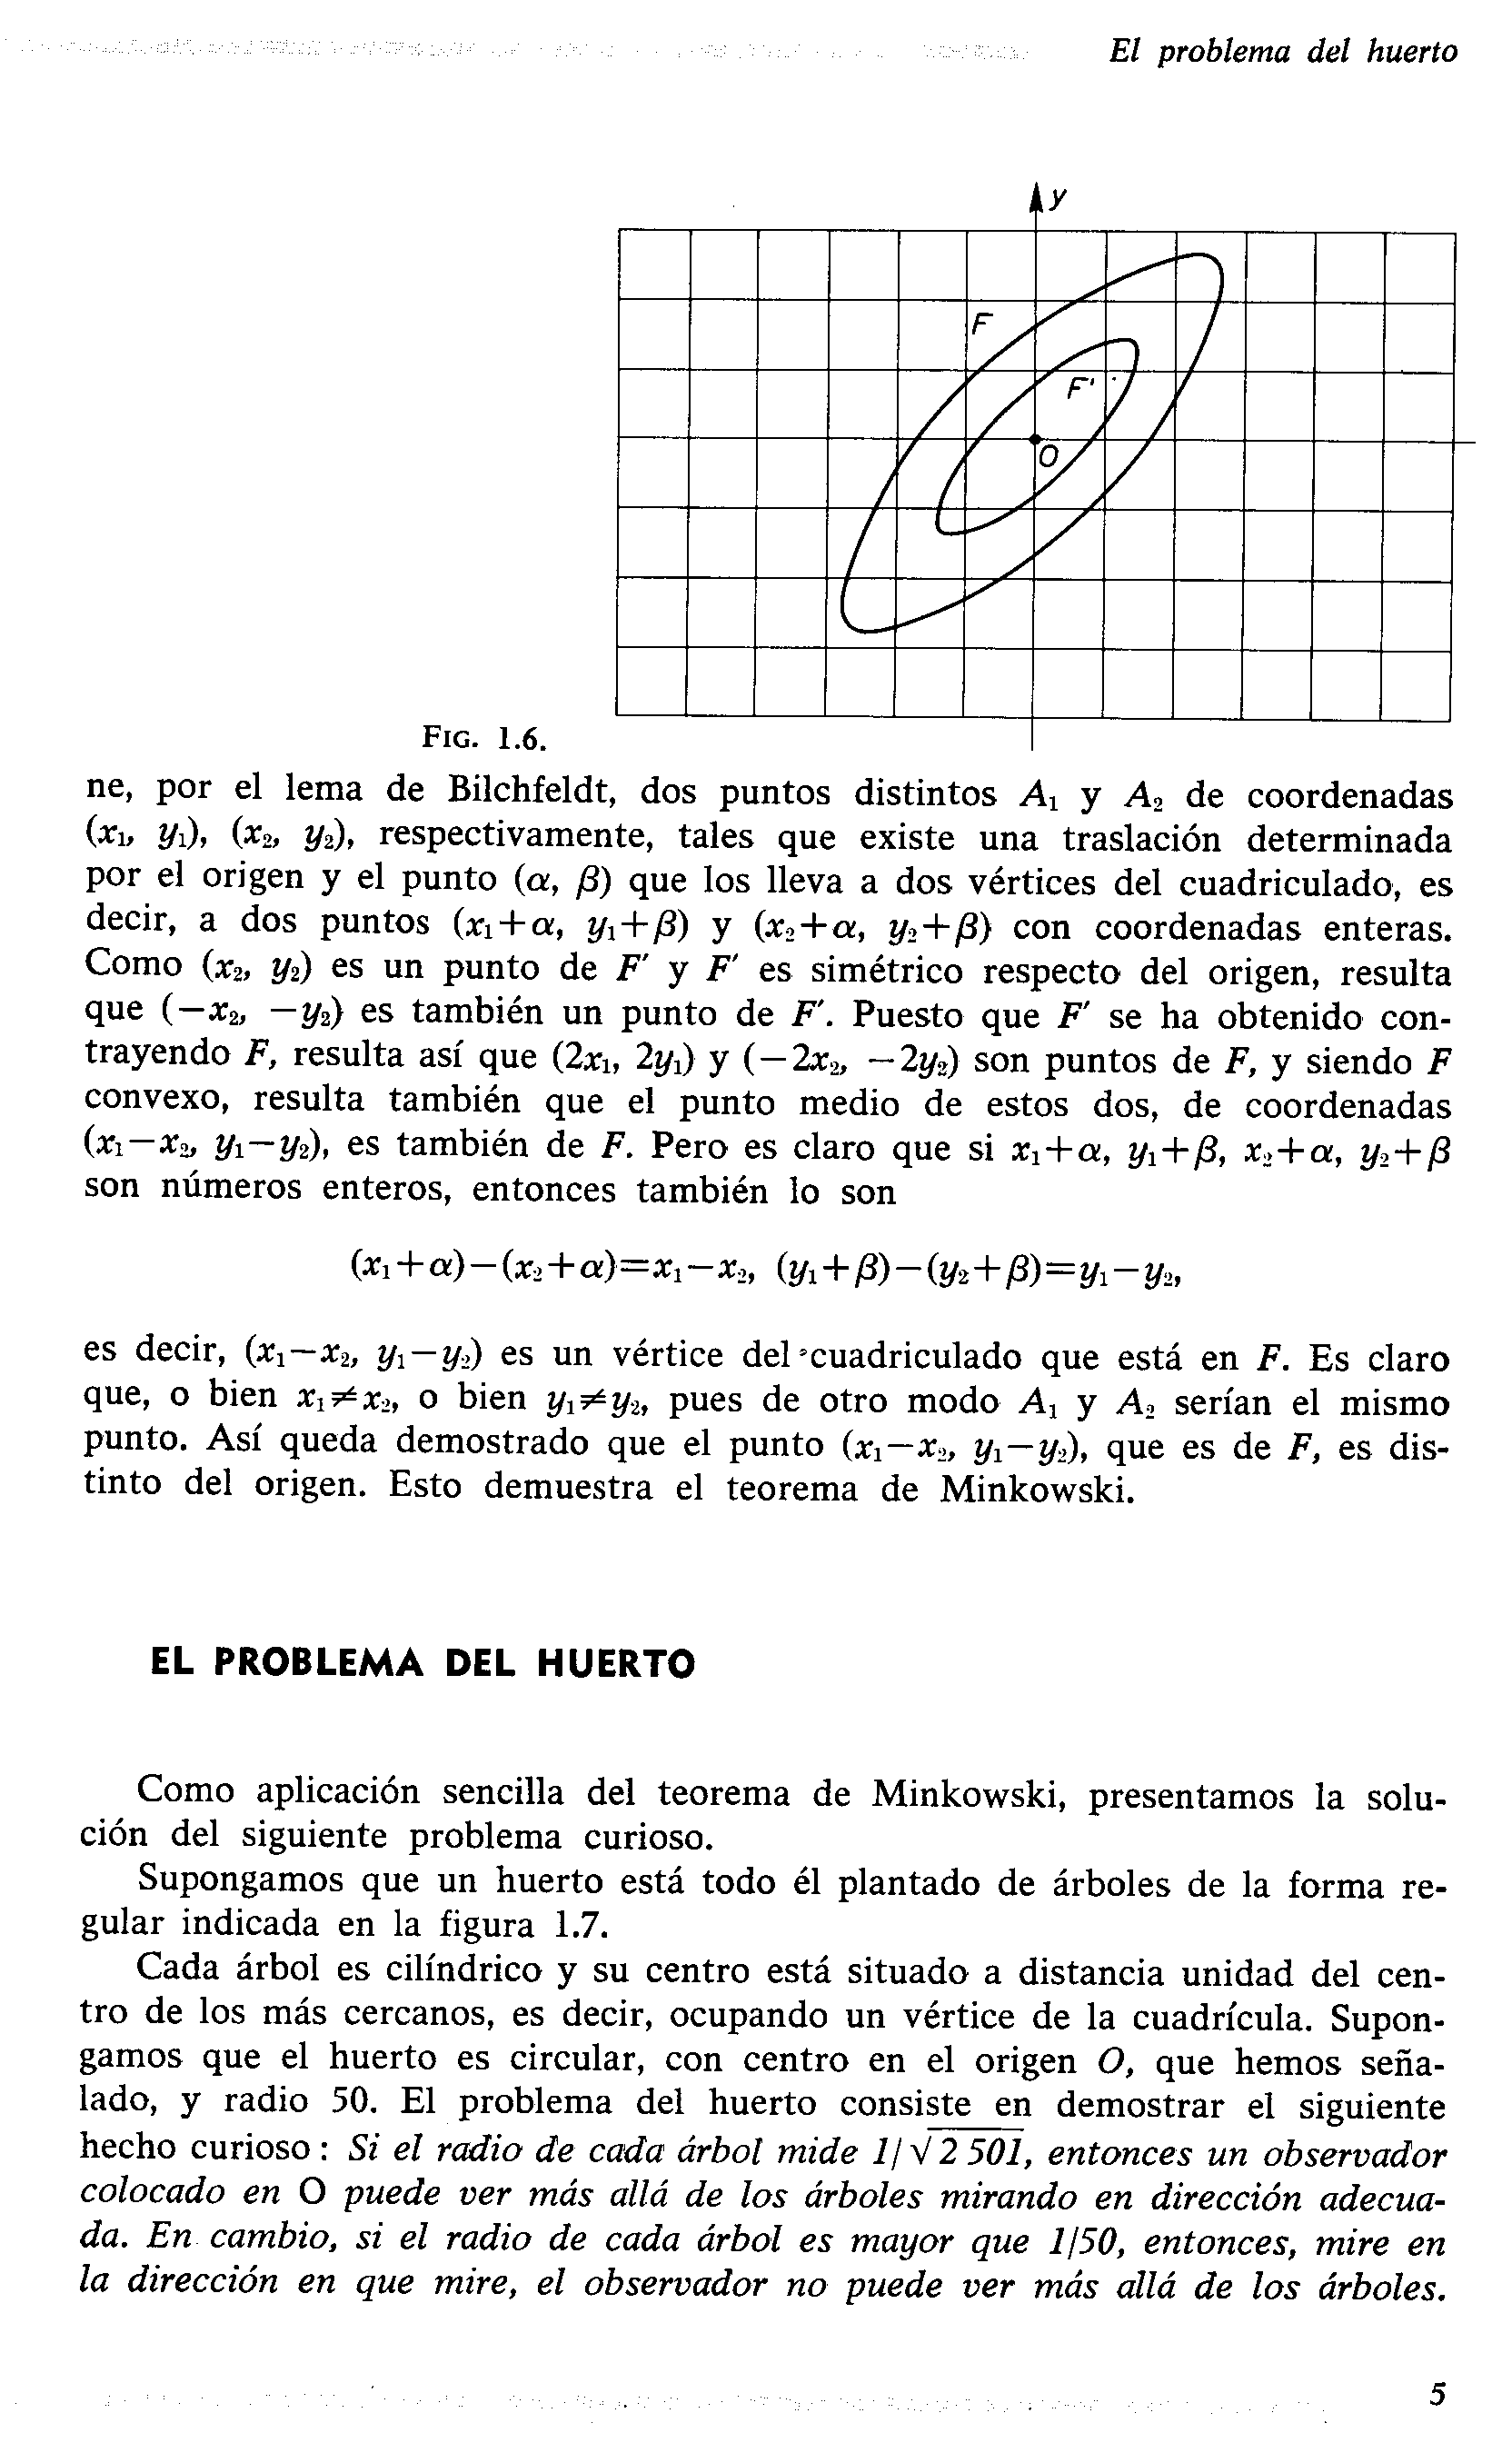 Graphics (p.9-1)